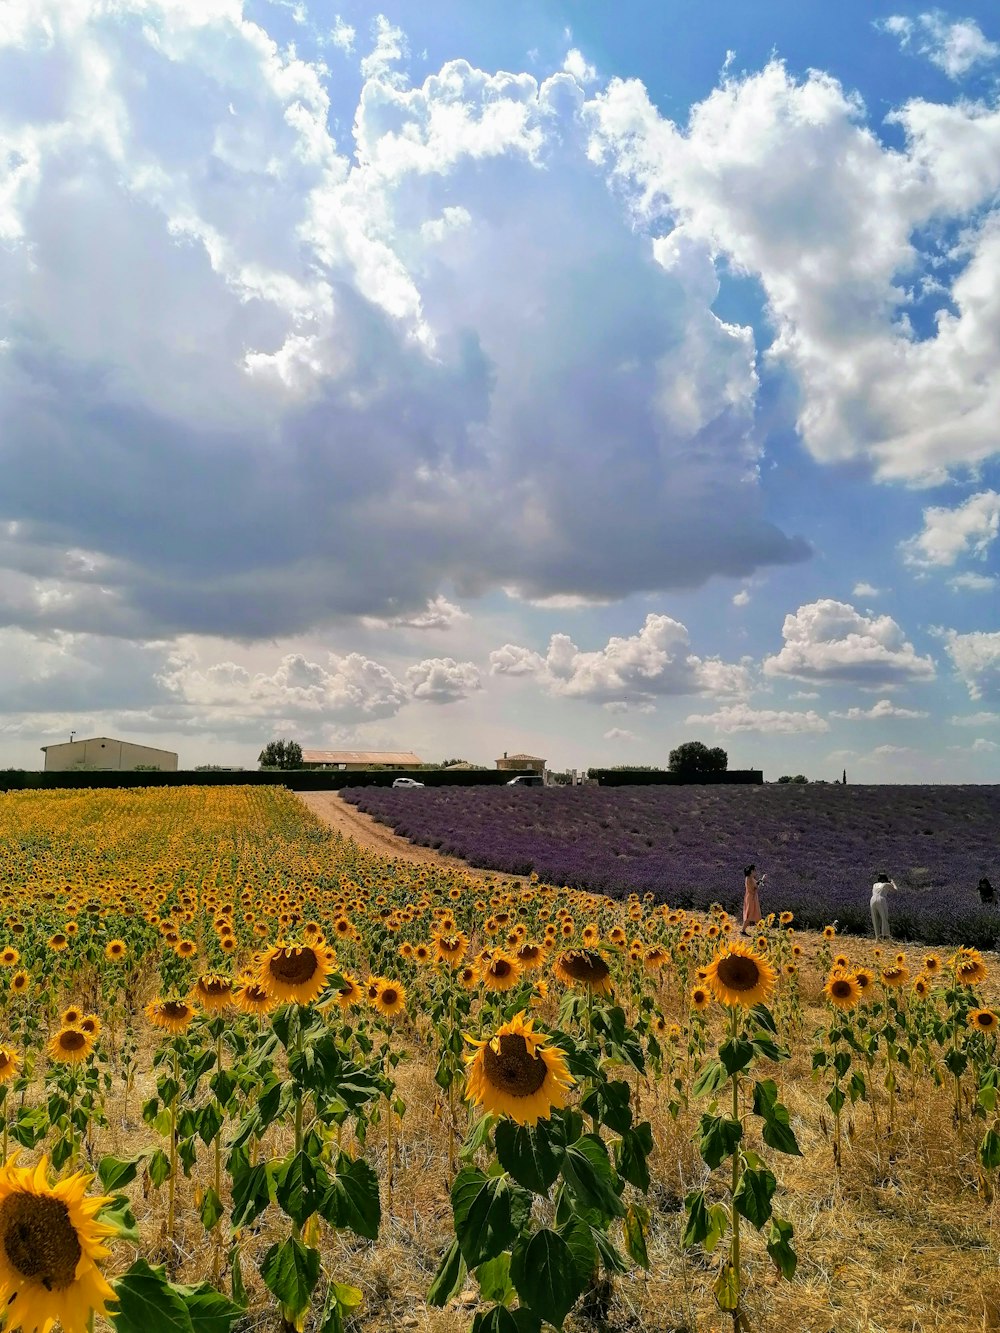 sunflower field under cloudy sky during daytime